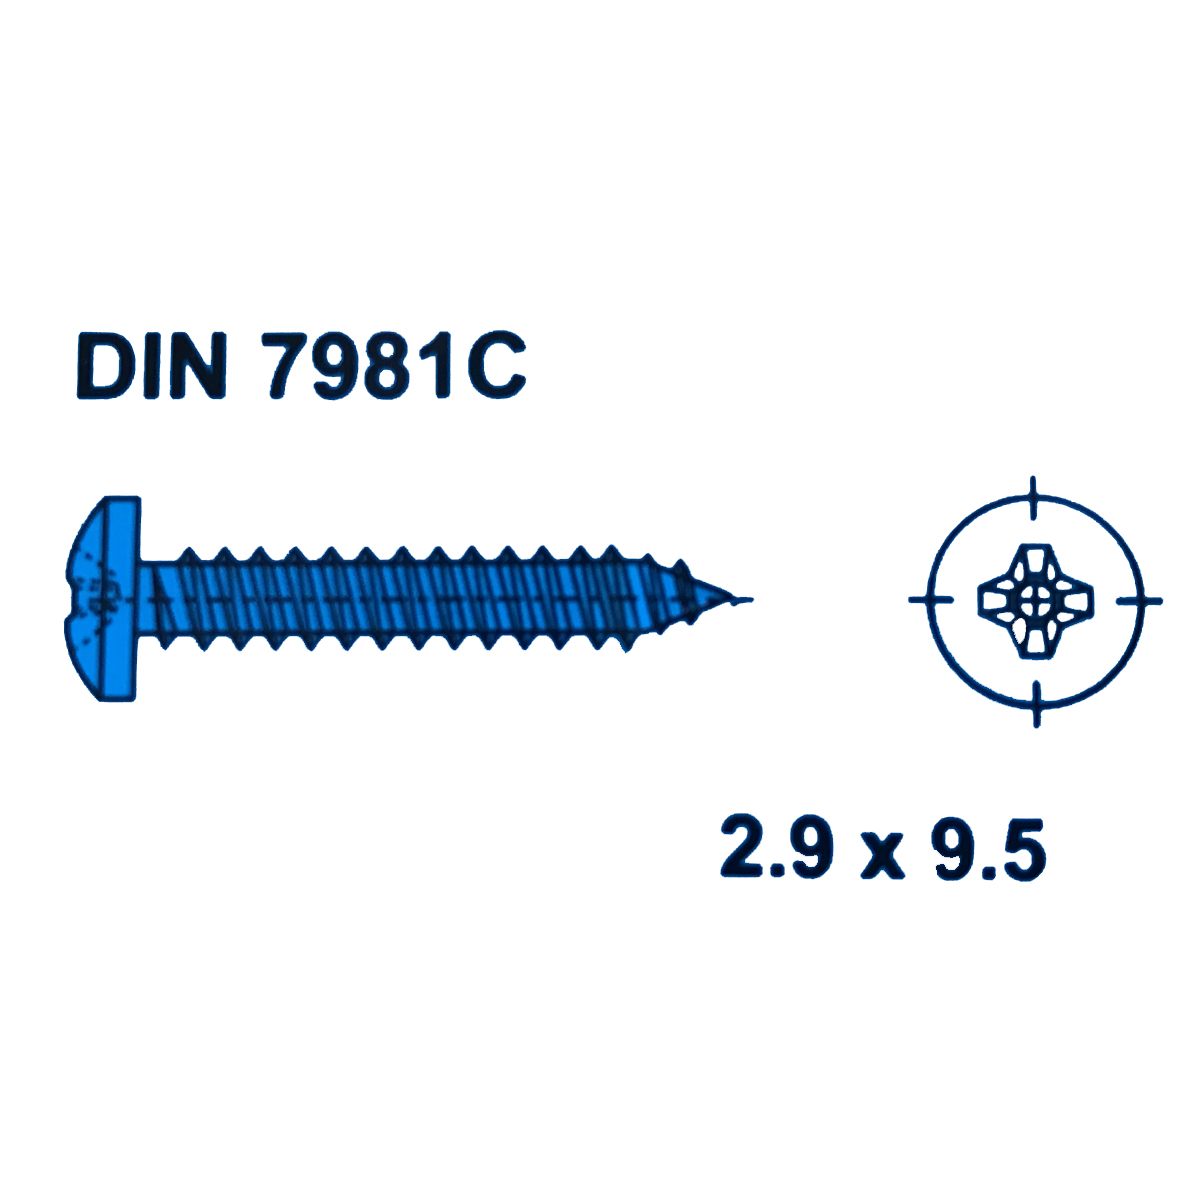 DIN 7981 C, Linsen-Blechschraube, ST 3,9x9,5, ST, verzinkt